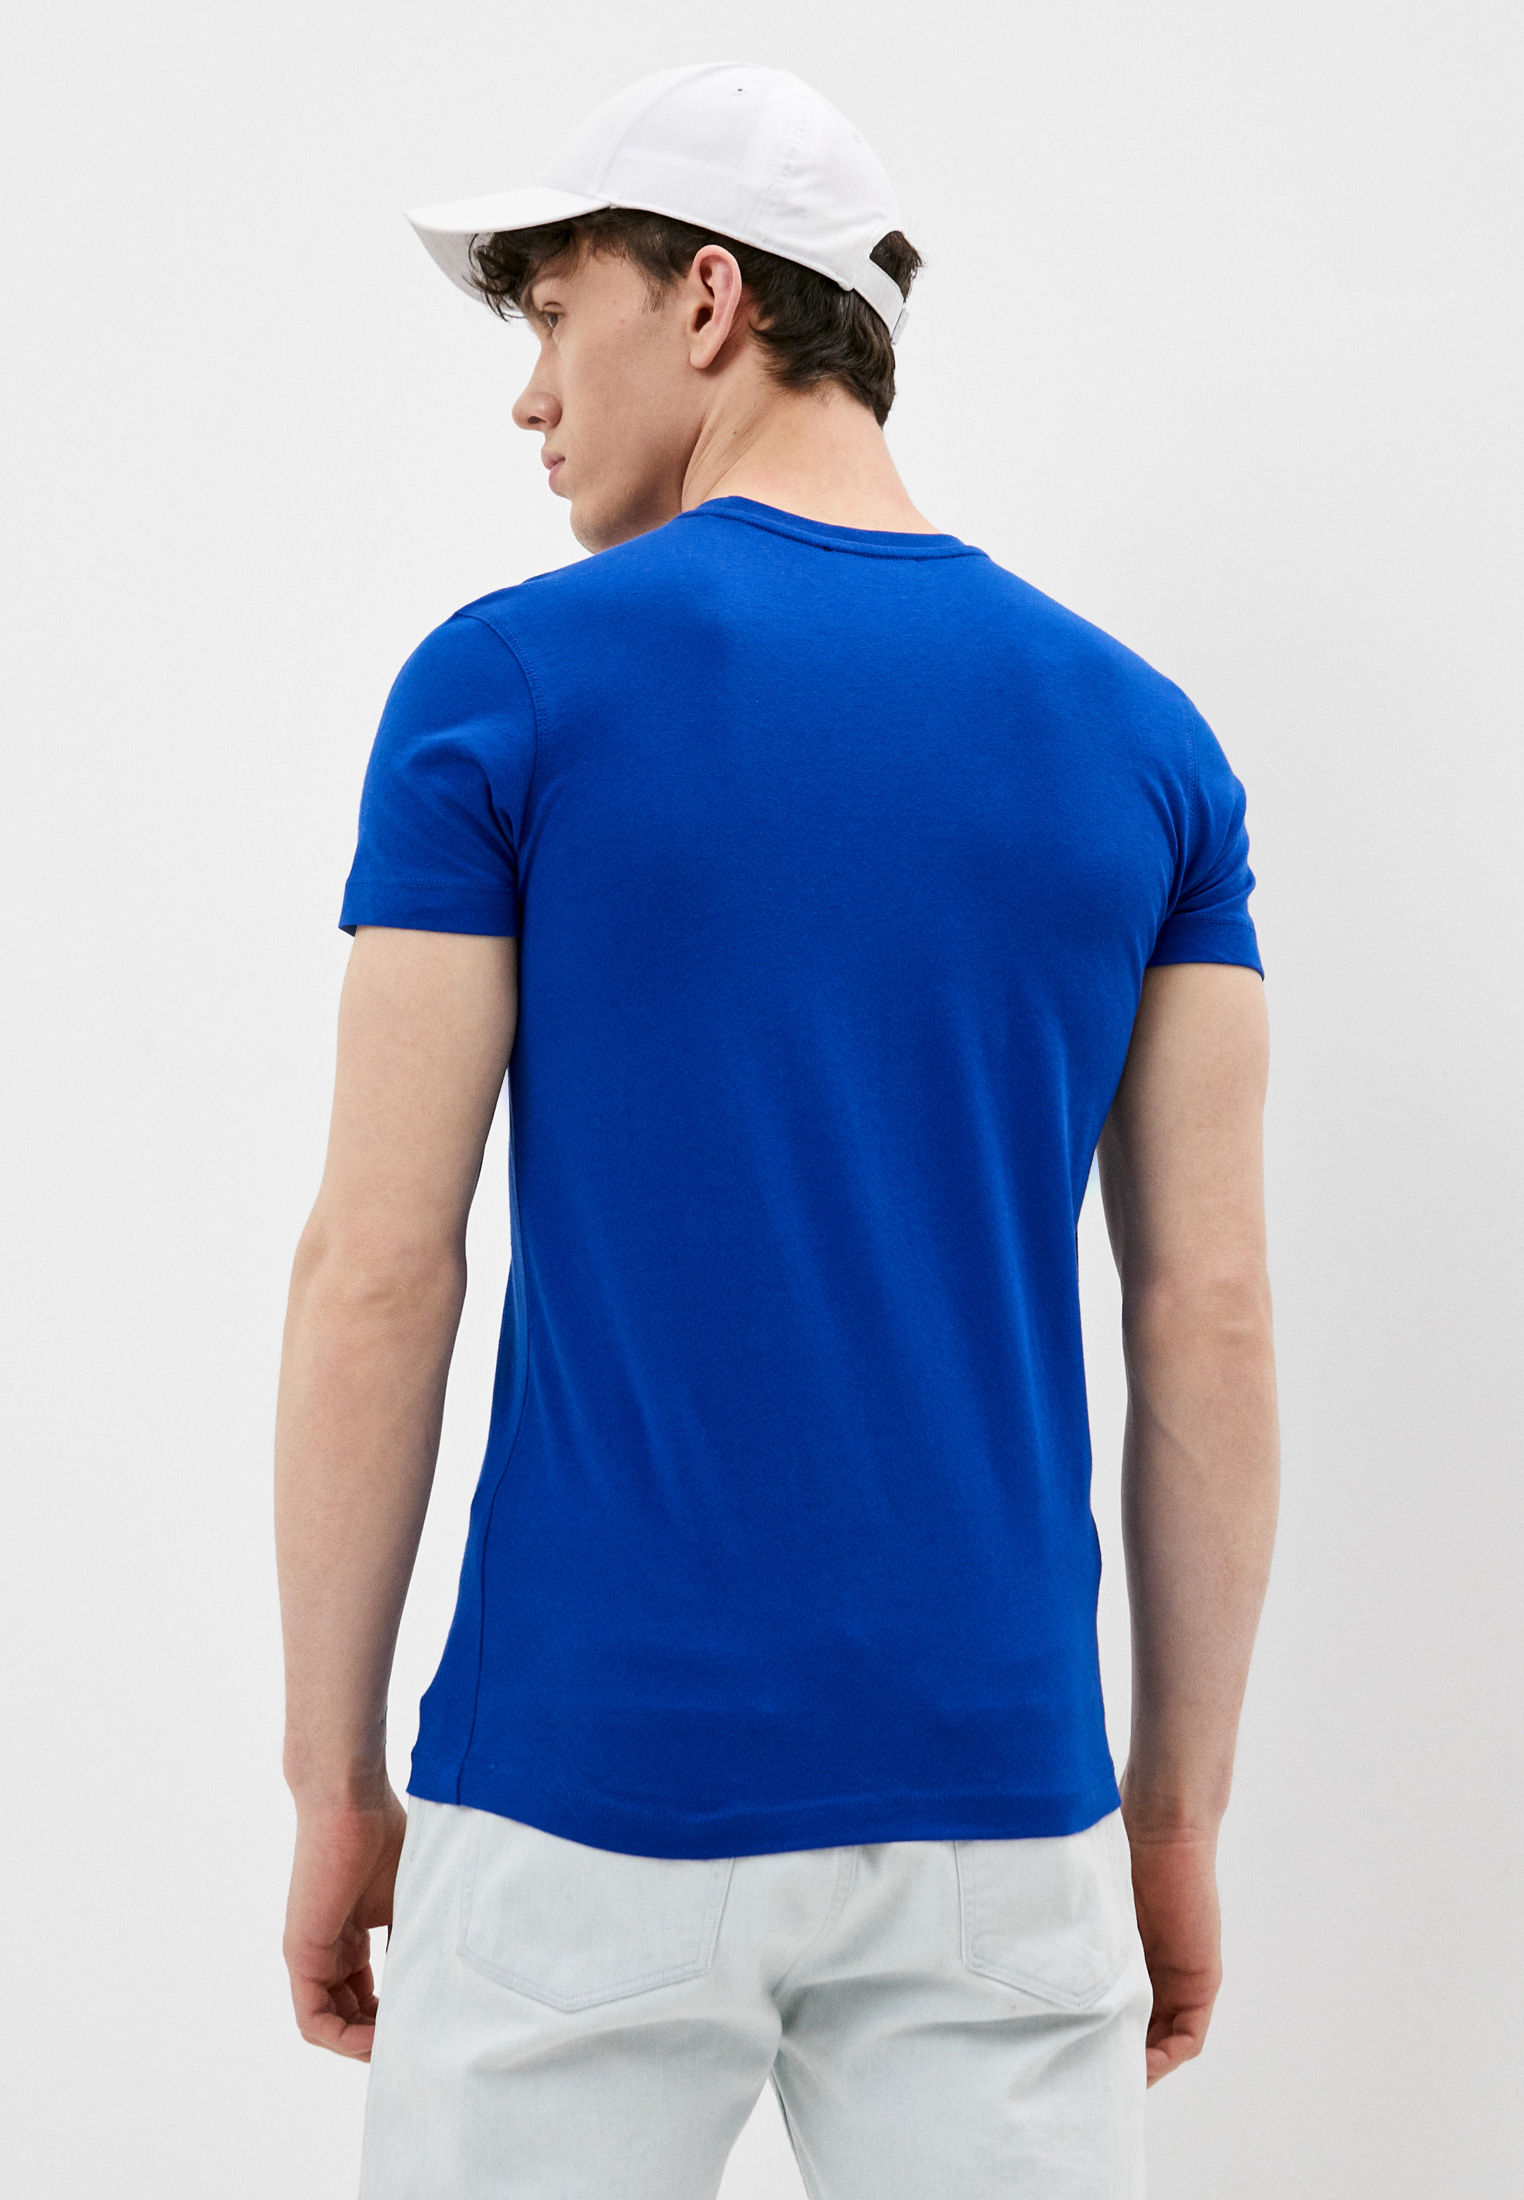 Мужская футболка Roberto Cavalli (Роберто Кавалли) HST61EA0270: изображение 4